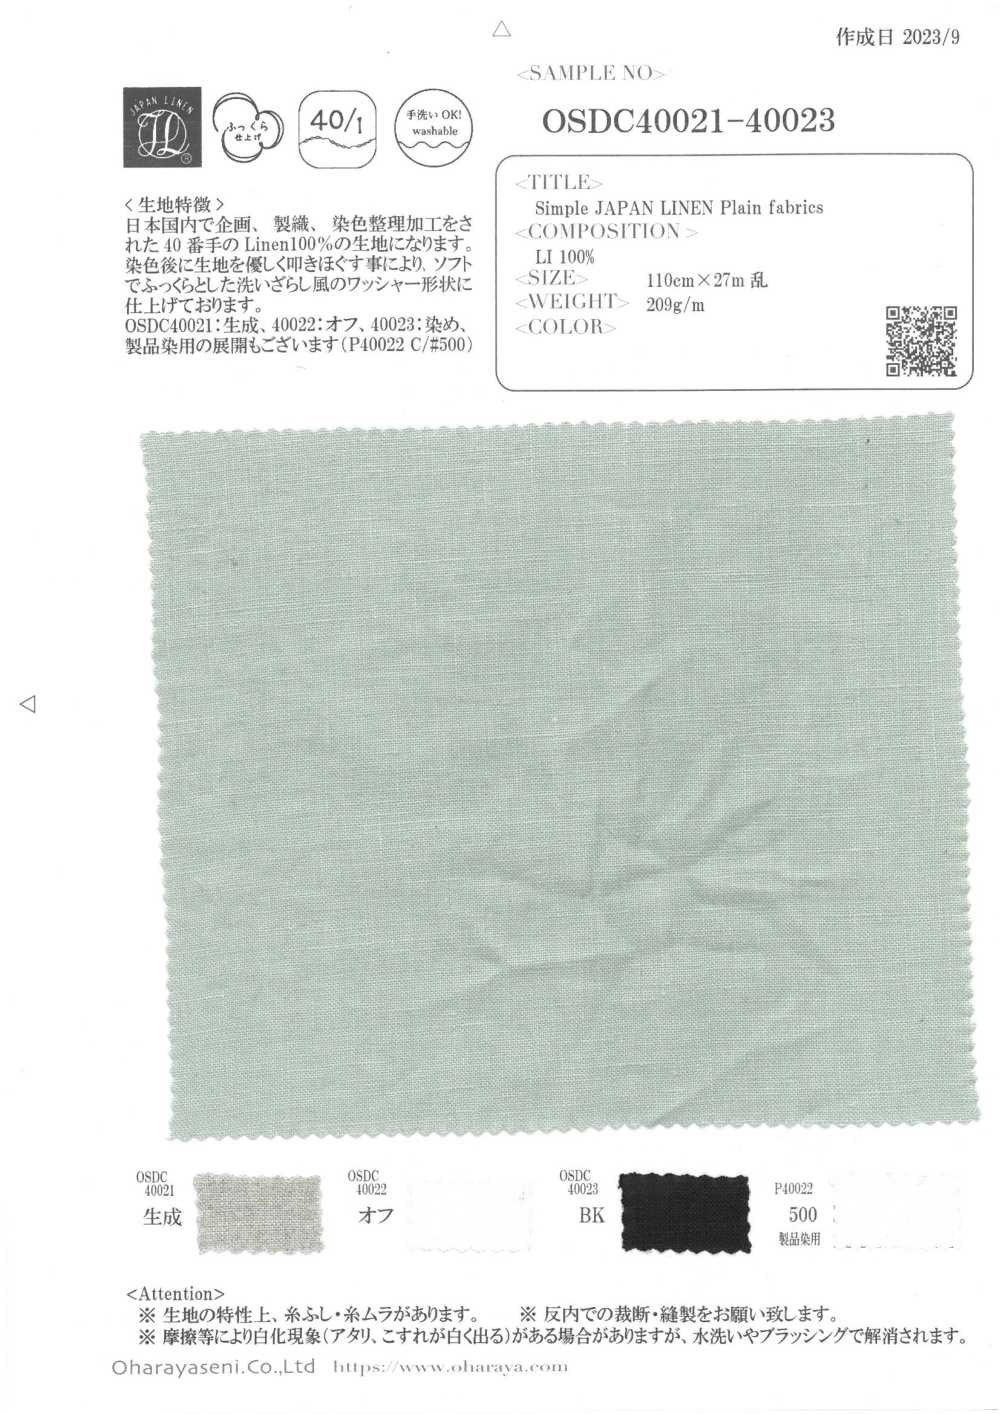 OSDC40021 Simple JAPAN LINEN Plain fabrics (키나리)[원단] Oharayaseni